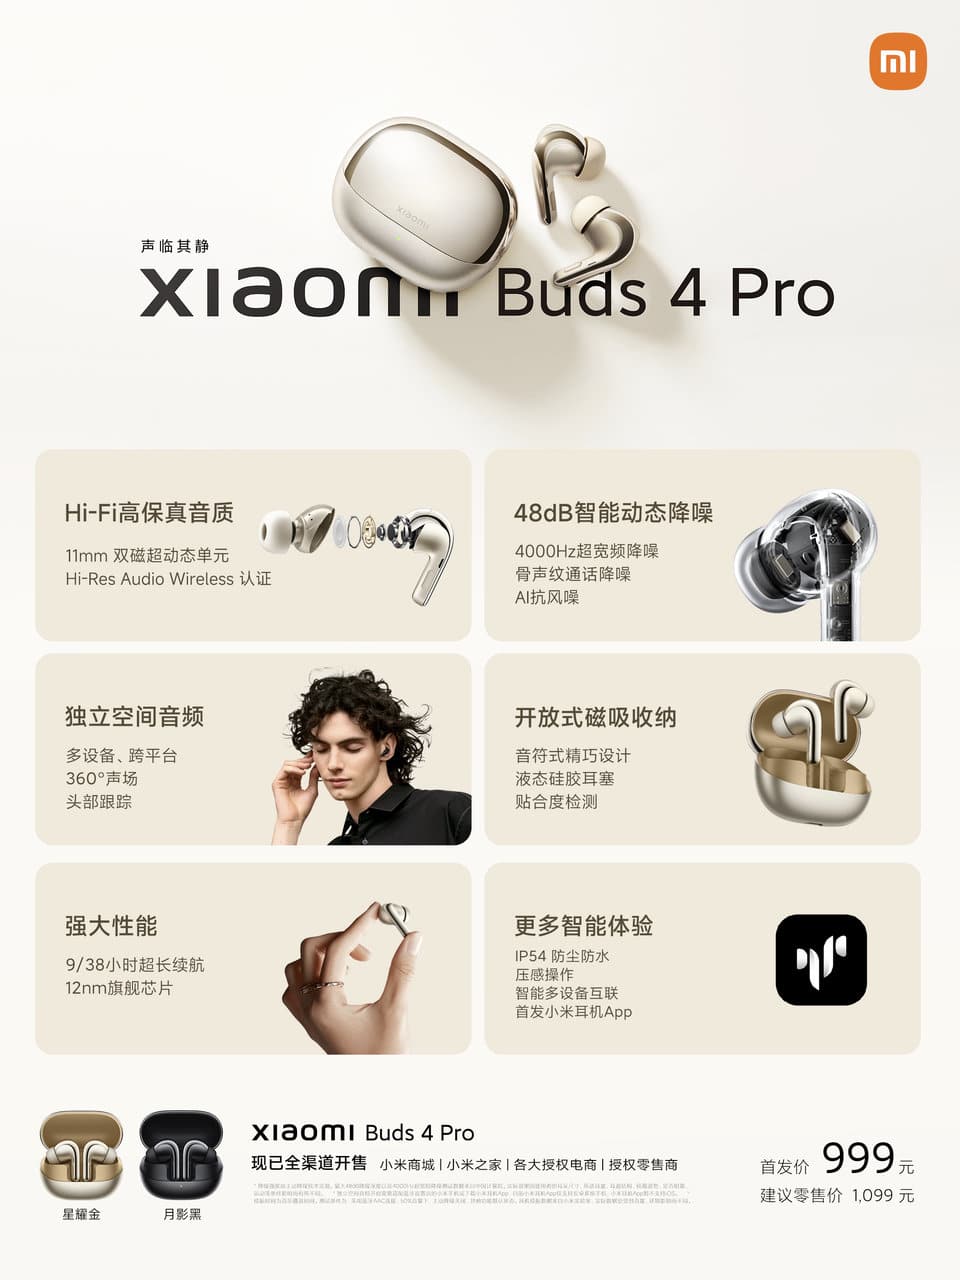 Xiaomi Buds 4 Pro specs